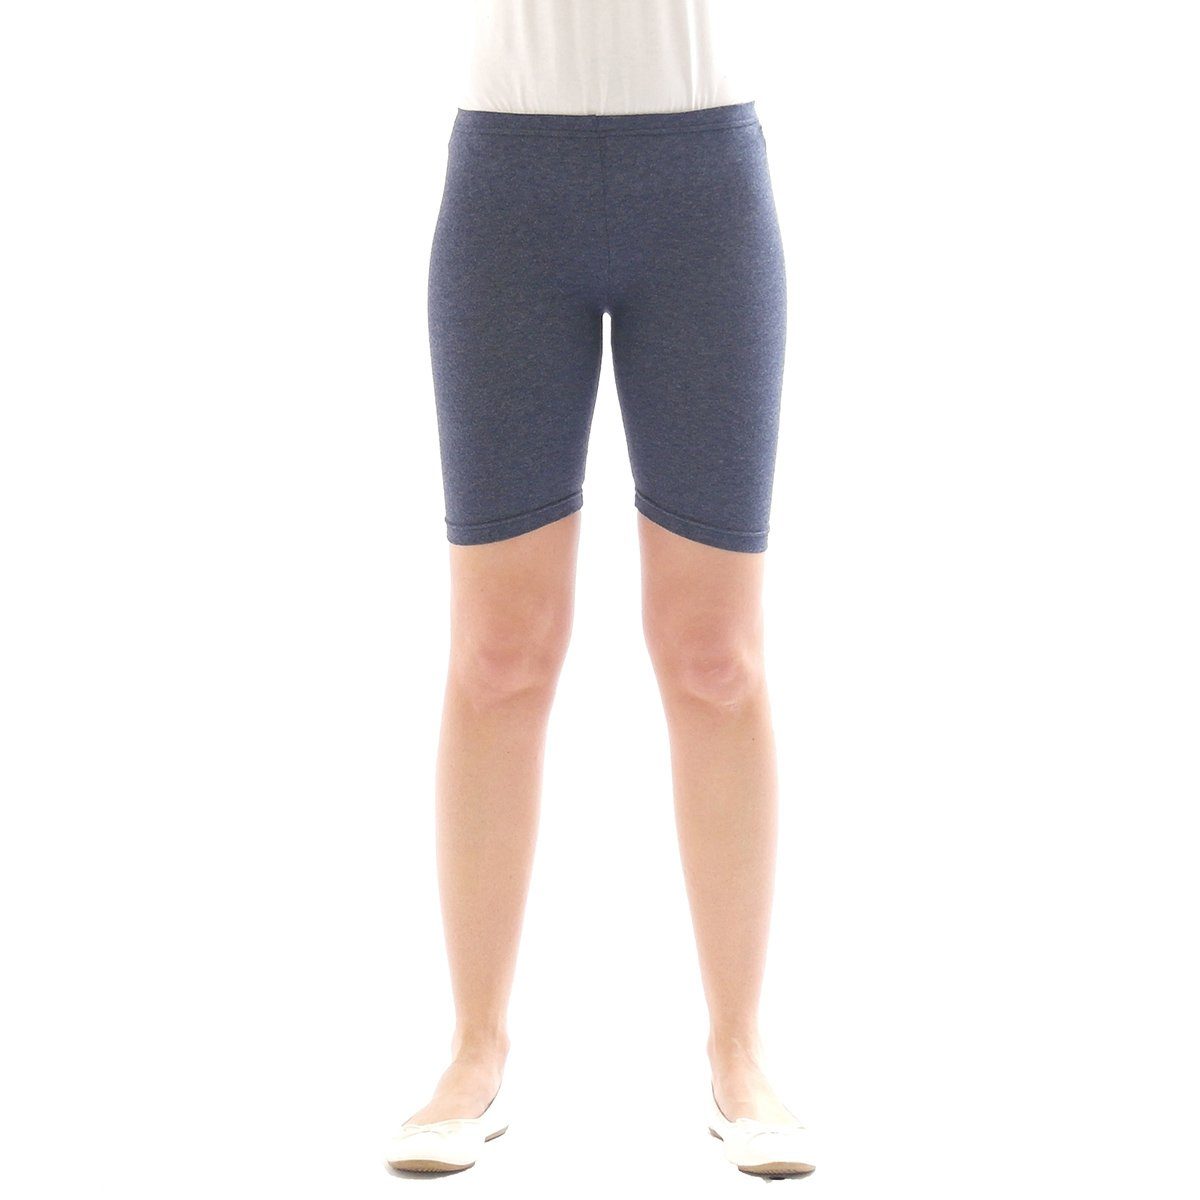 SYS Shorts Kinder Shorts Sport Pants 1/2 Baumwolle Jungen Mädchen jeans